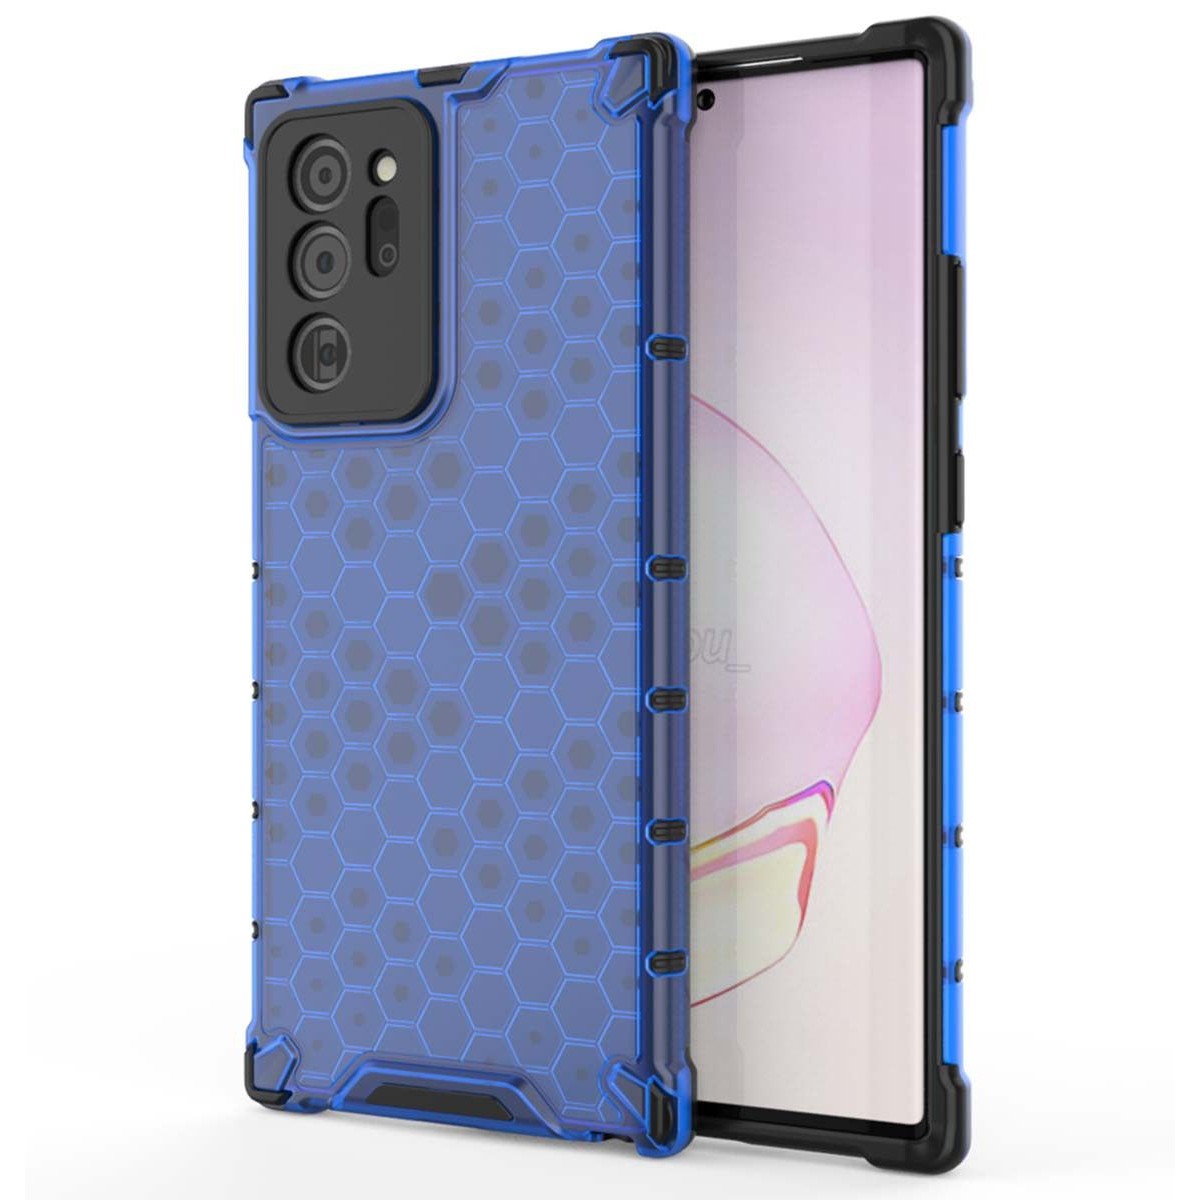 Funda Tipo Honeycomb Armor (Pc+Tpu) Azul para Samsung Galaxy Note 20